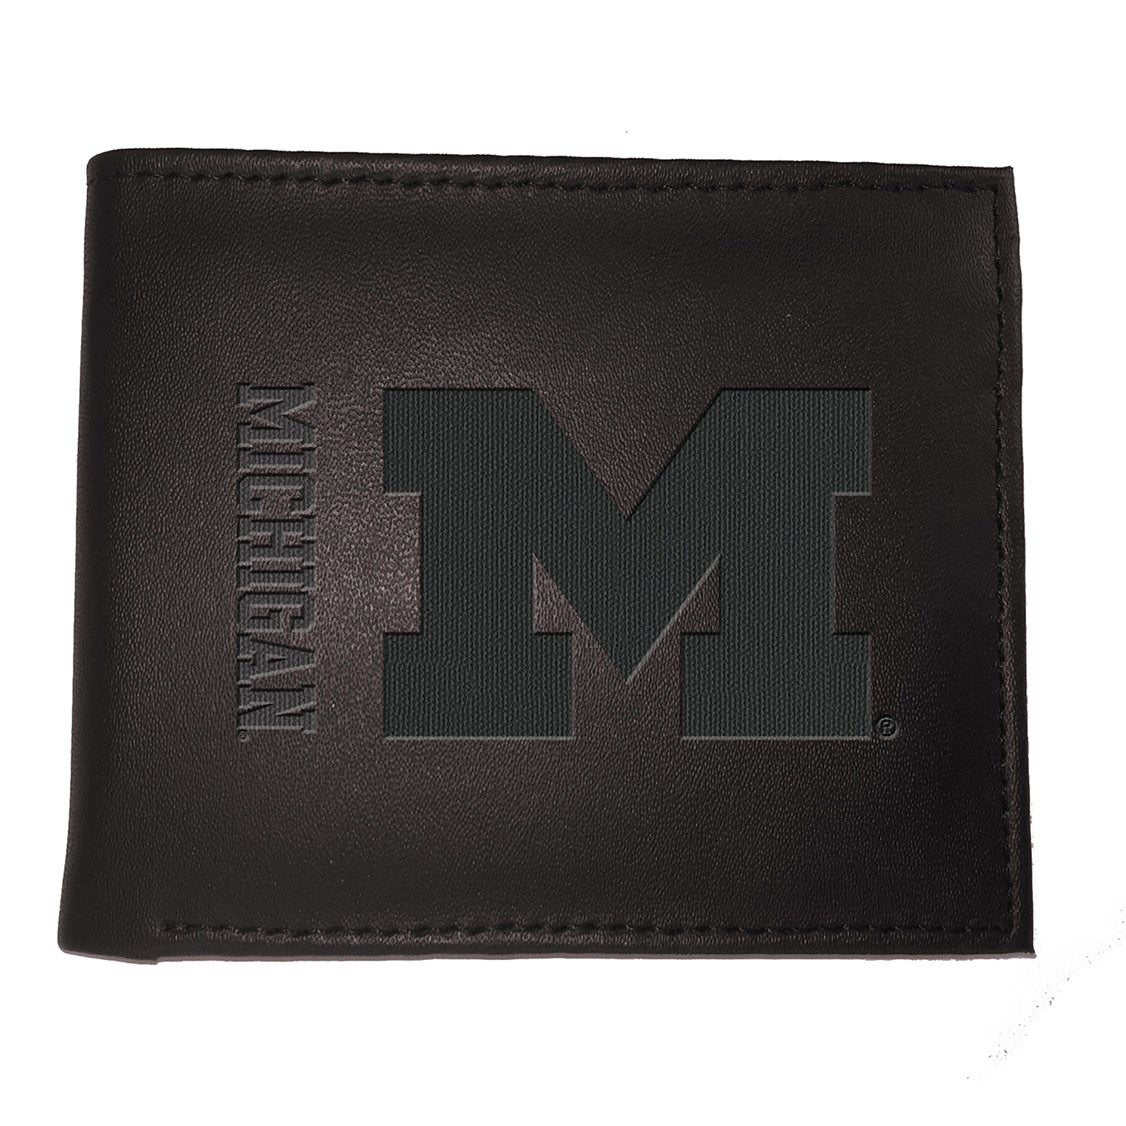 University of Michigan Bi-Fold Leather Wallet